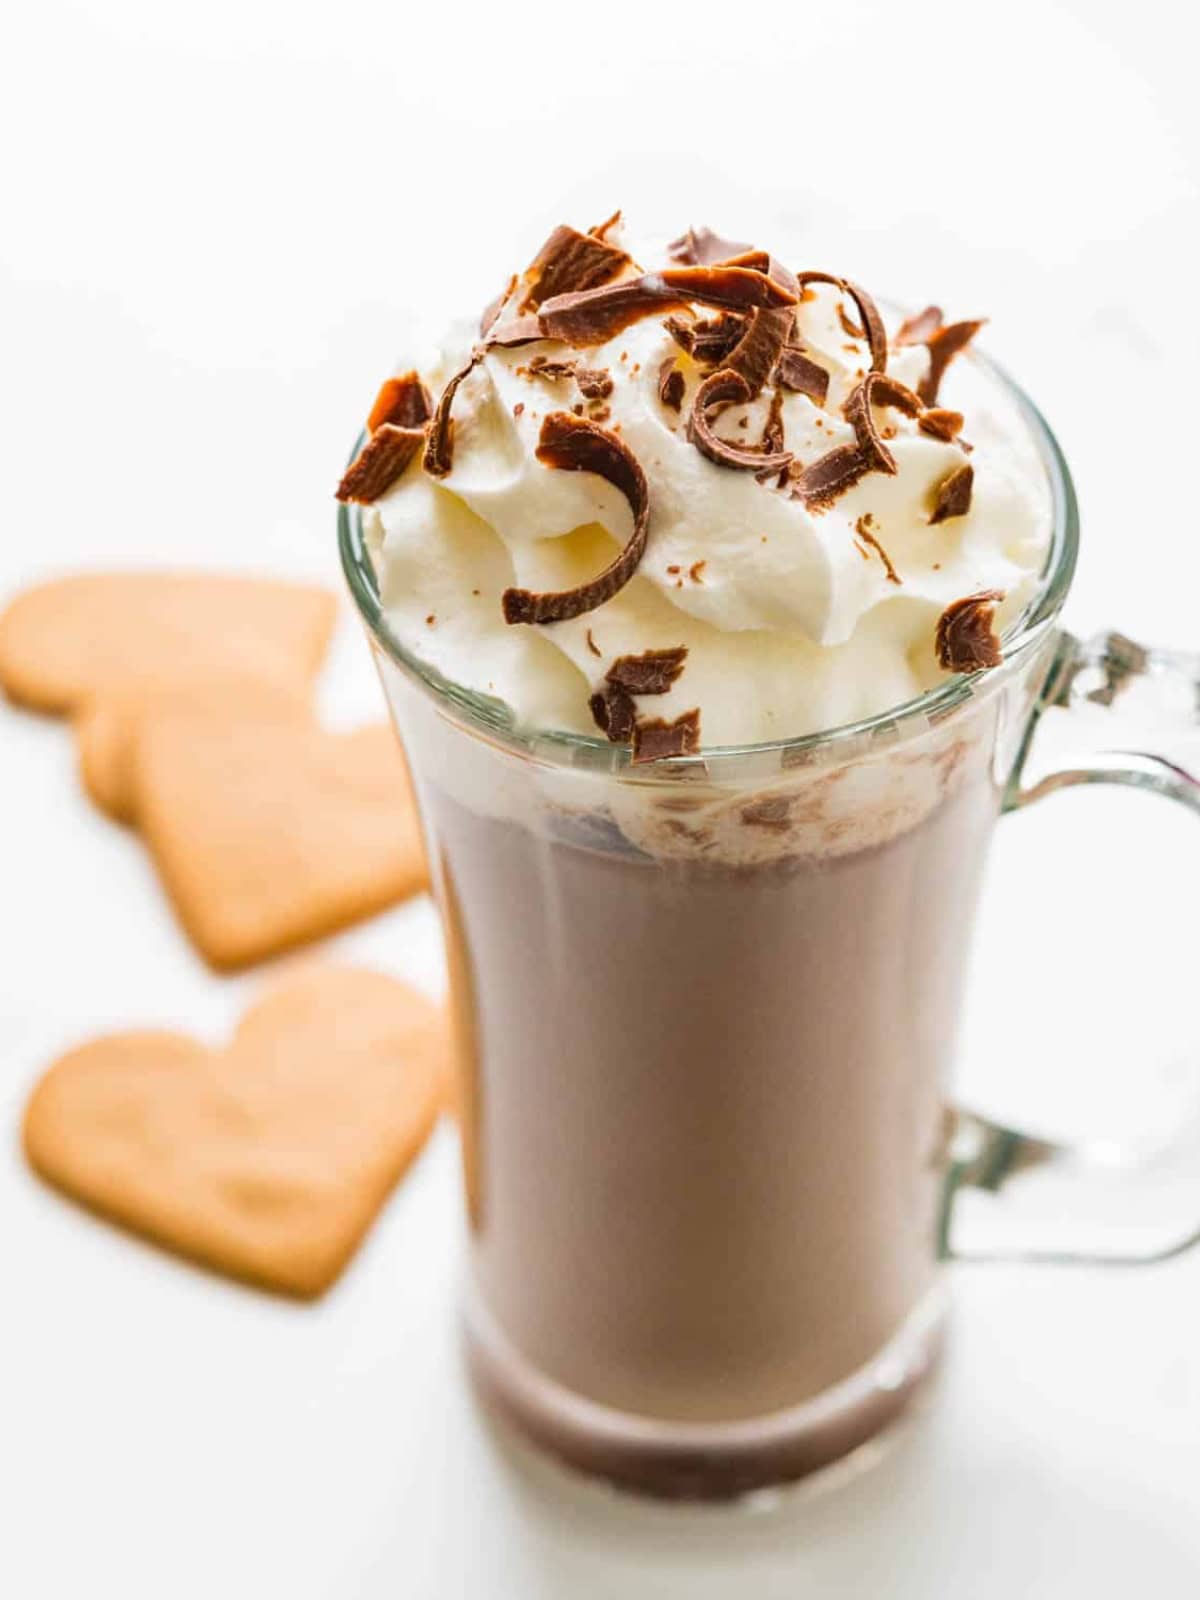 Irish mocha latte topped with whipped cream and chocolate shredding.